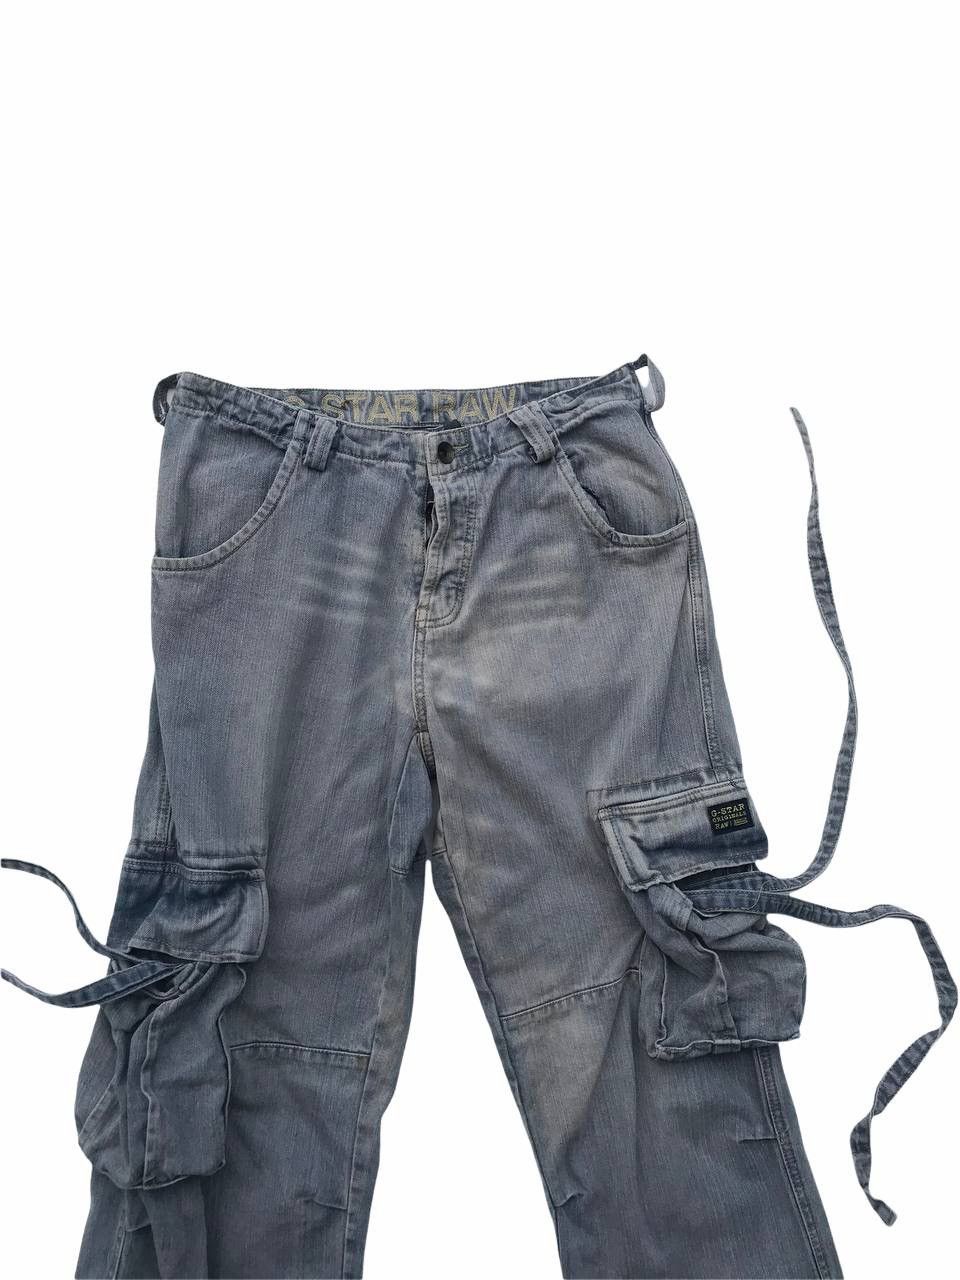 Gstar Gstar Denim Cargo Multipocket Streetwear Fashion Pants Size US 31 - 2 Preview